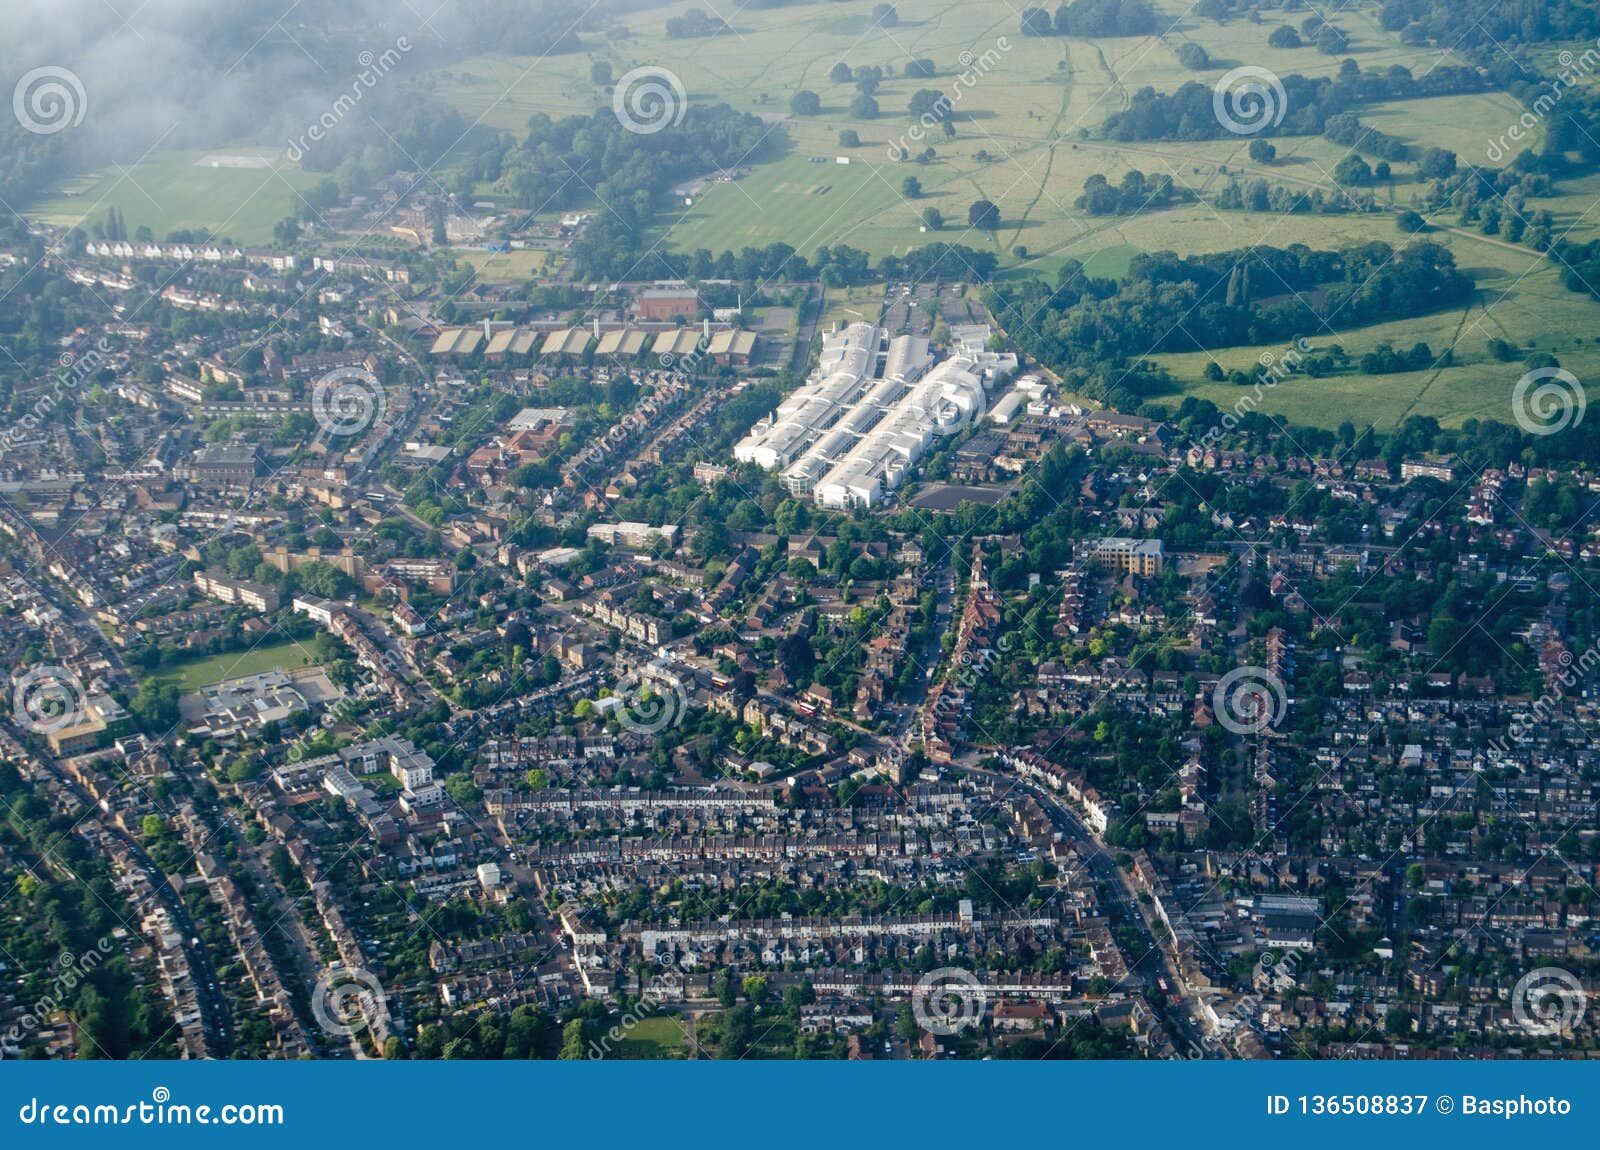 aerial view of teddington, west london